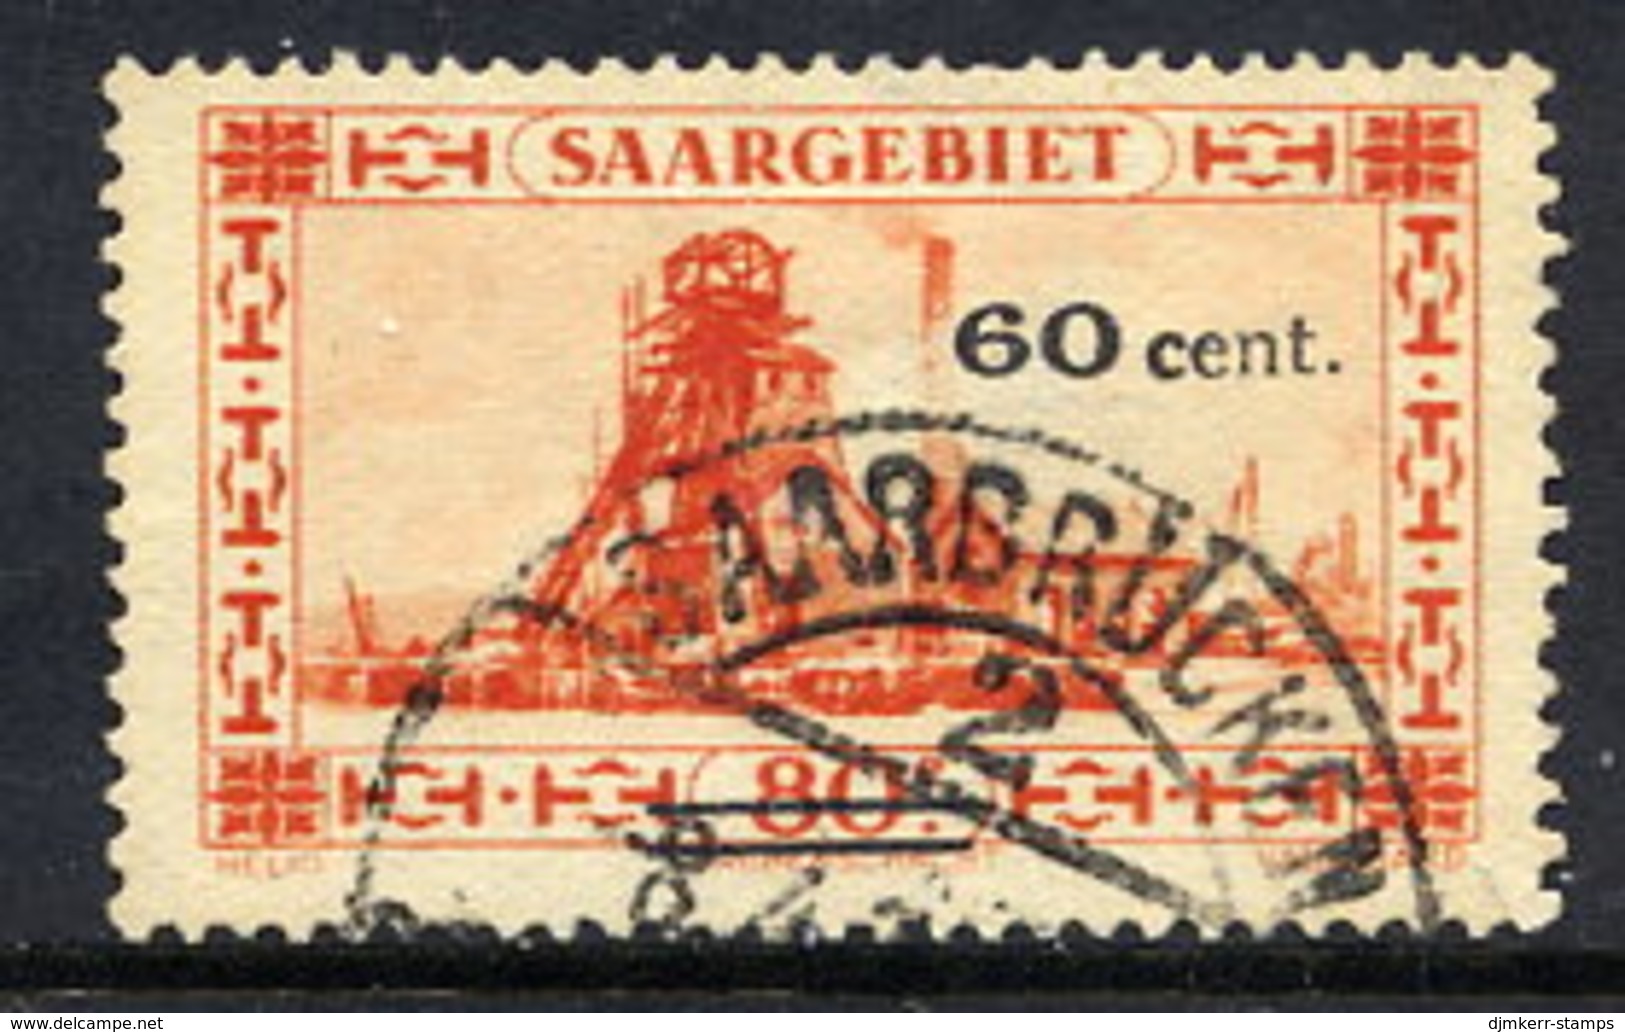 SAAR 1930 Surcharge 60 C. On 80 C. Used.  Michel 142 - Used Stamps